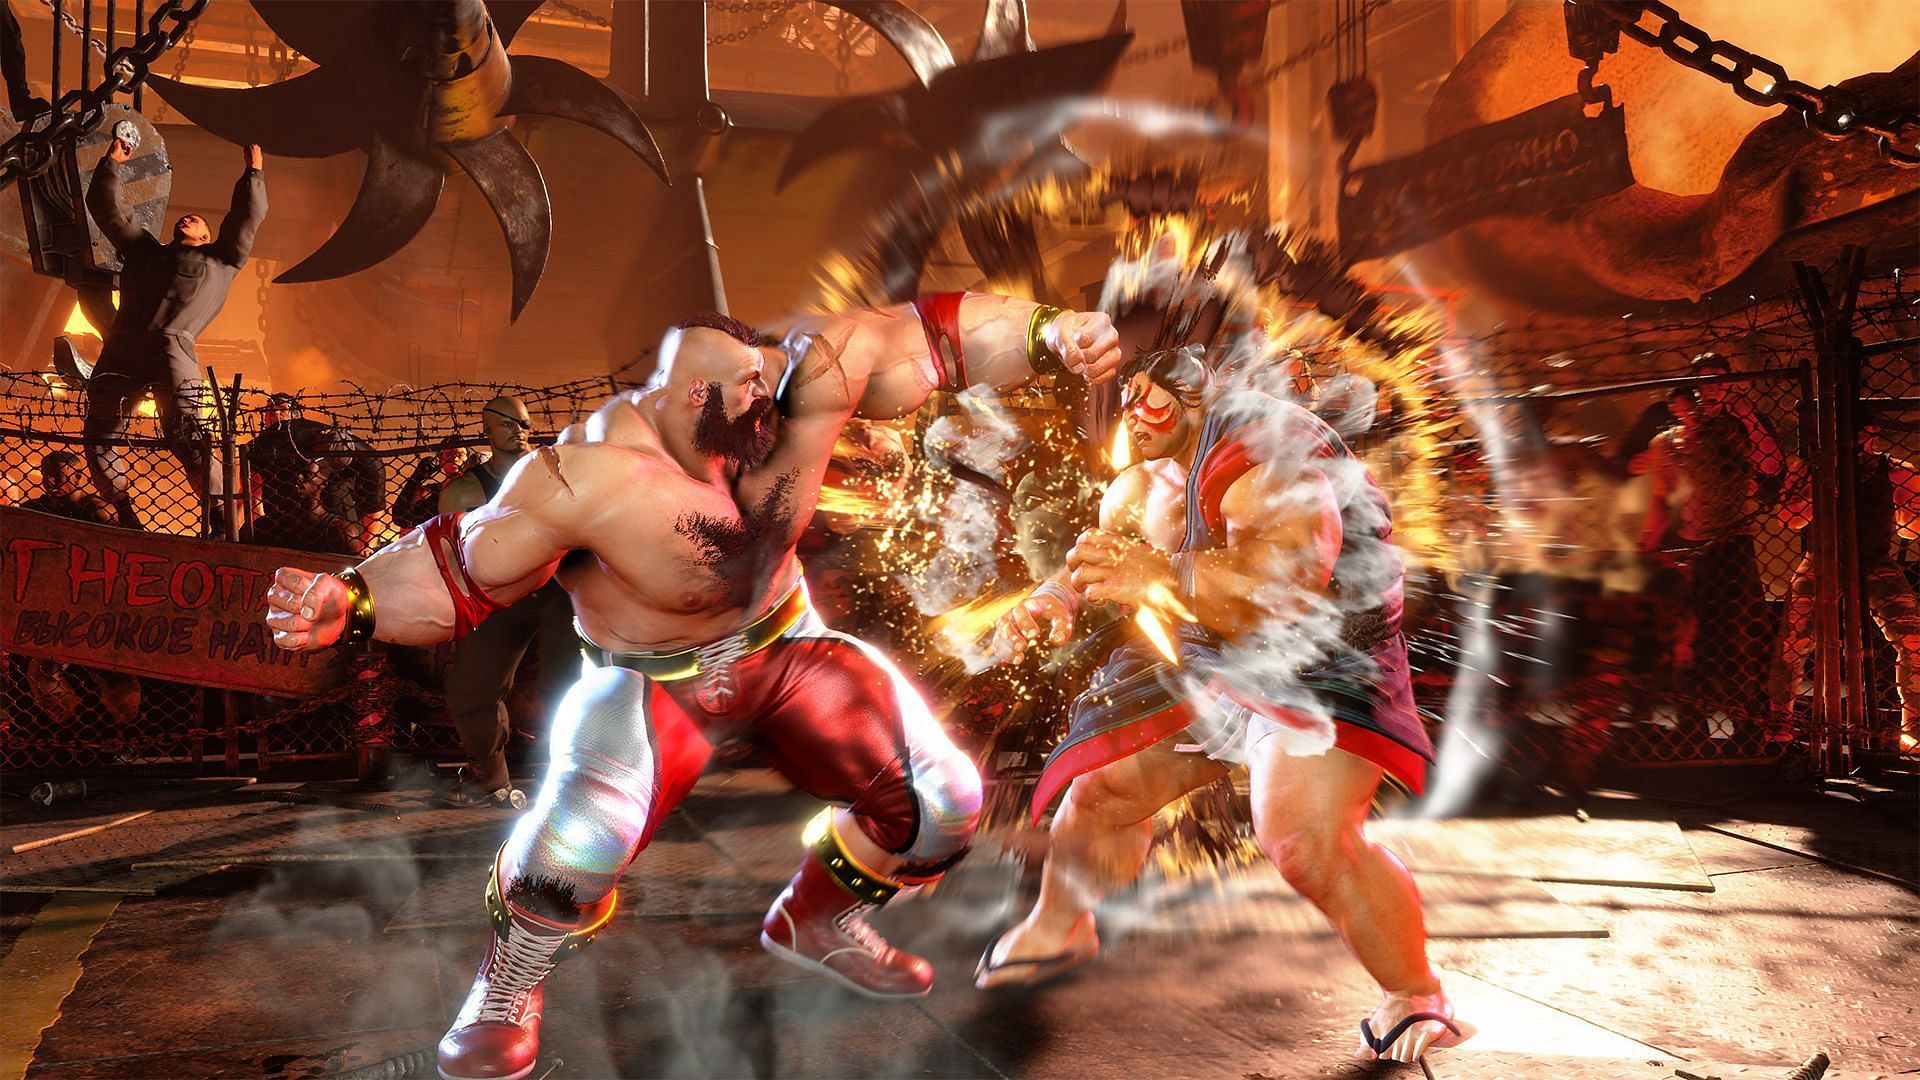 Zangief in action against E. Honda in Street Fighter 6 (Image via Capcom)